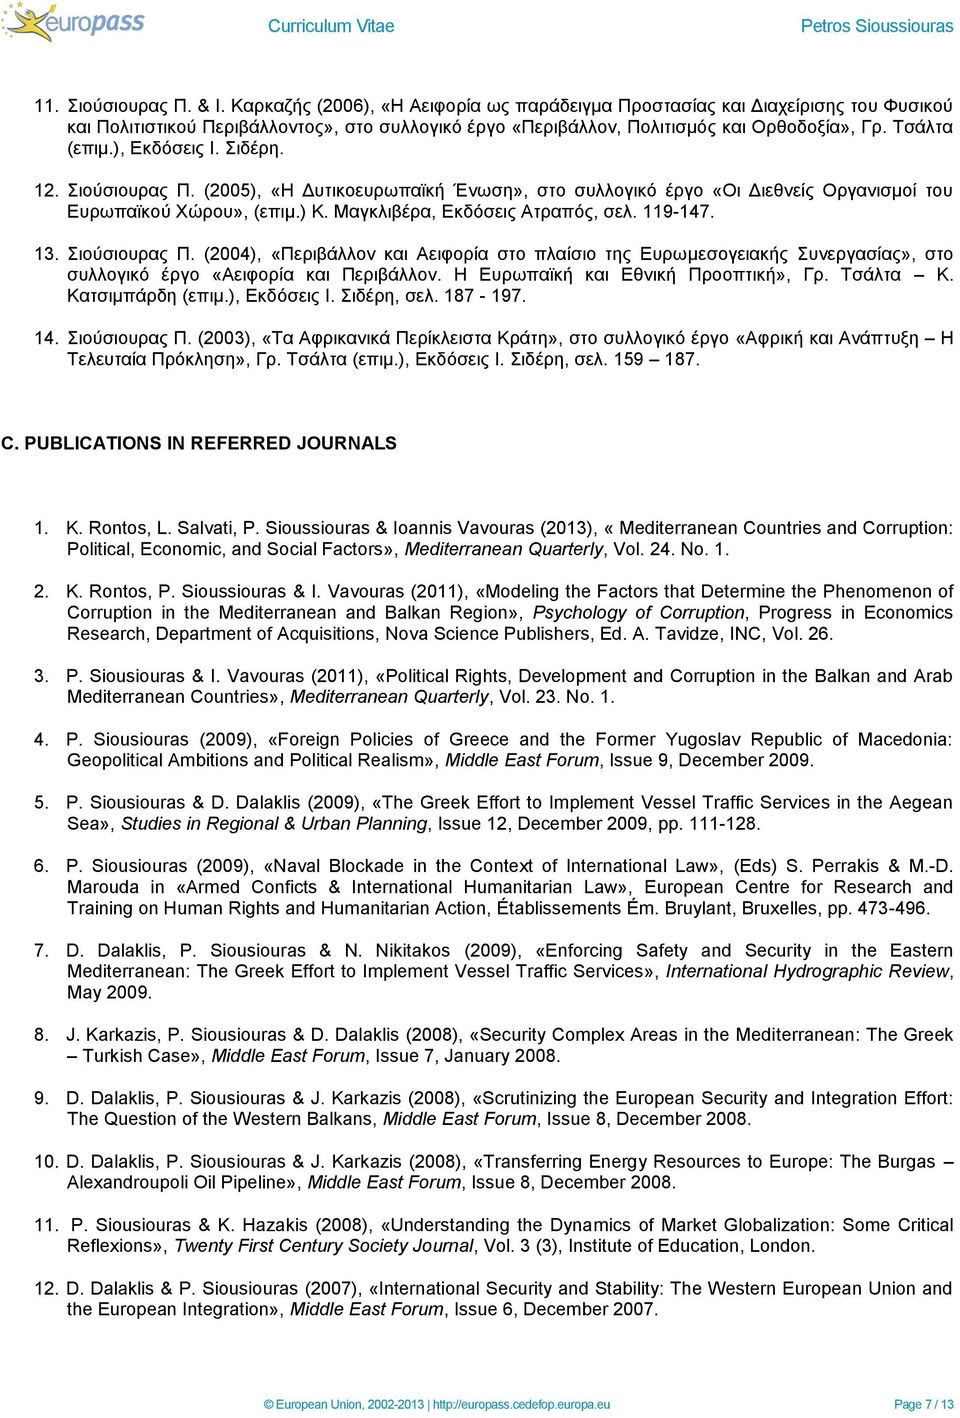 ), Eκδόσεις Ι. Σιδέρη. 12. Σιούσιουρας Π. (2005), «Η Δυτικοευρωπαϊκή Ένωση», στο συλλογικό έργο «Οι Διεθνείς Οργανισμοί του Ευρωπαϊκού Χώρου», (επιμ.) Κ. Μαγκλιβέρα, Eκδόσεις Ατραπός, σελ. 119-147.